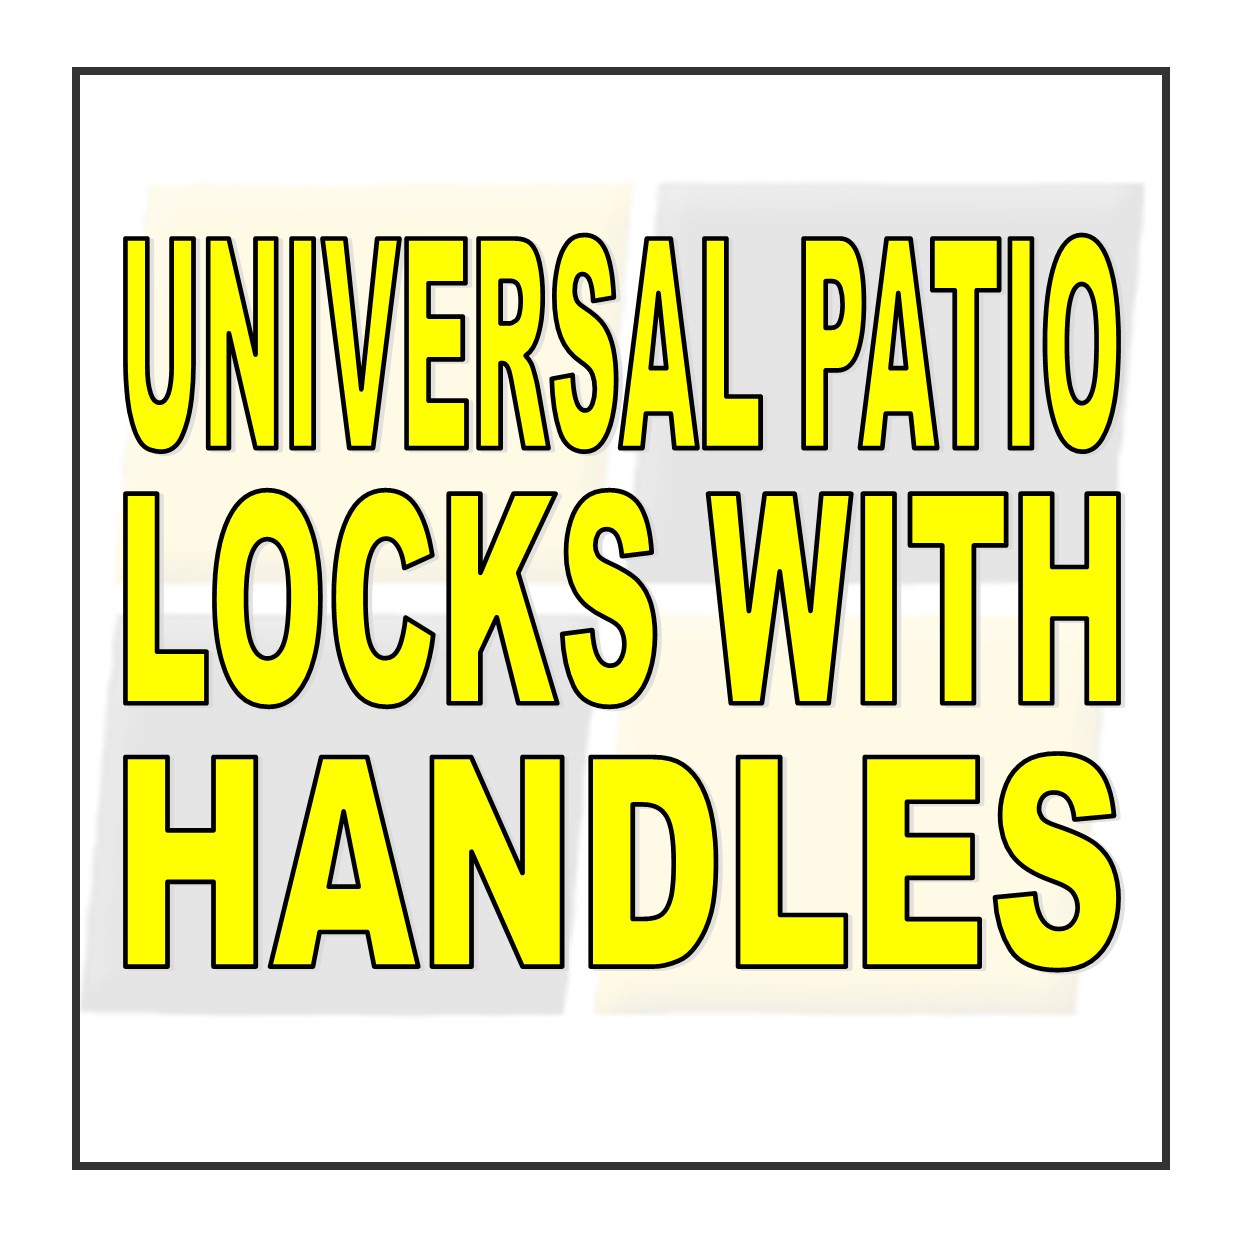 Universal Patio Locks with Handles